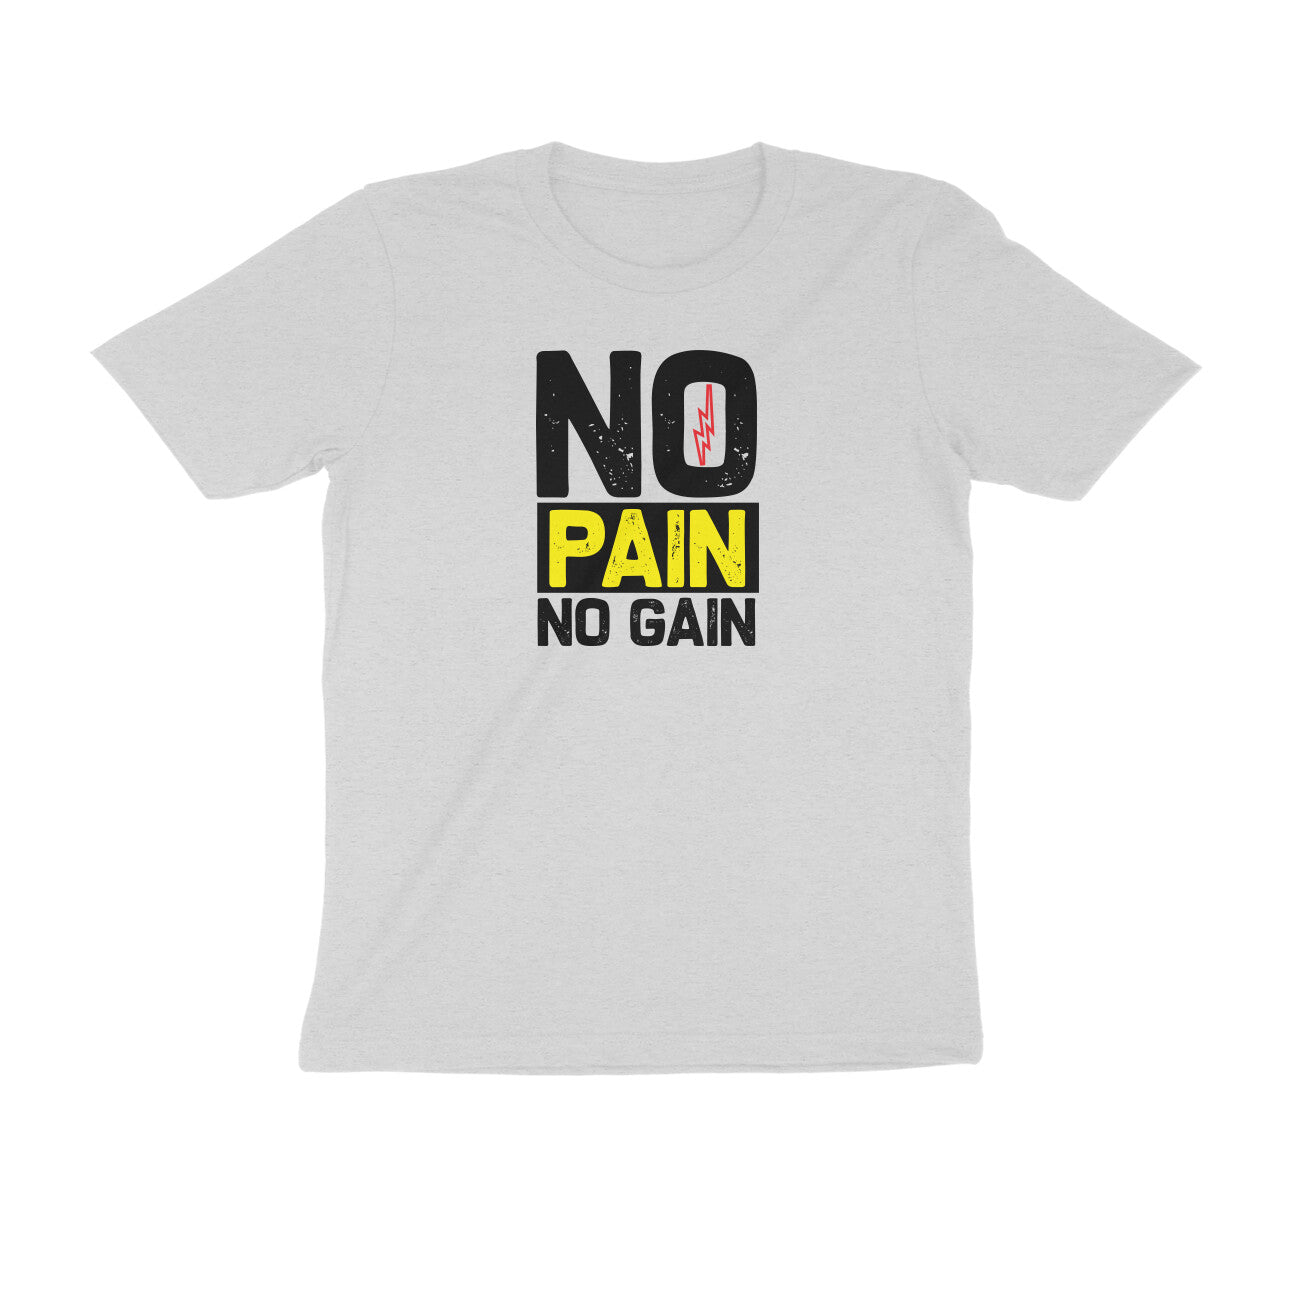 TNH - Men's Round Neck Tshirt - No Pain No Gain